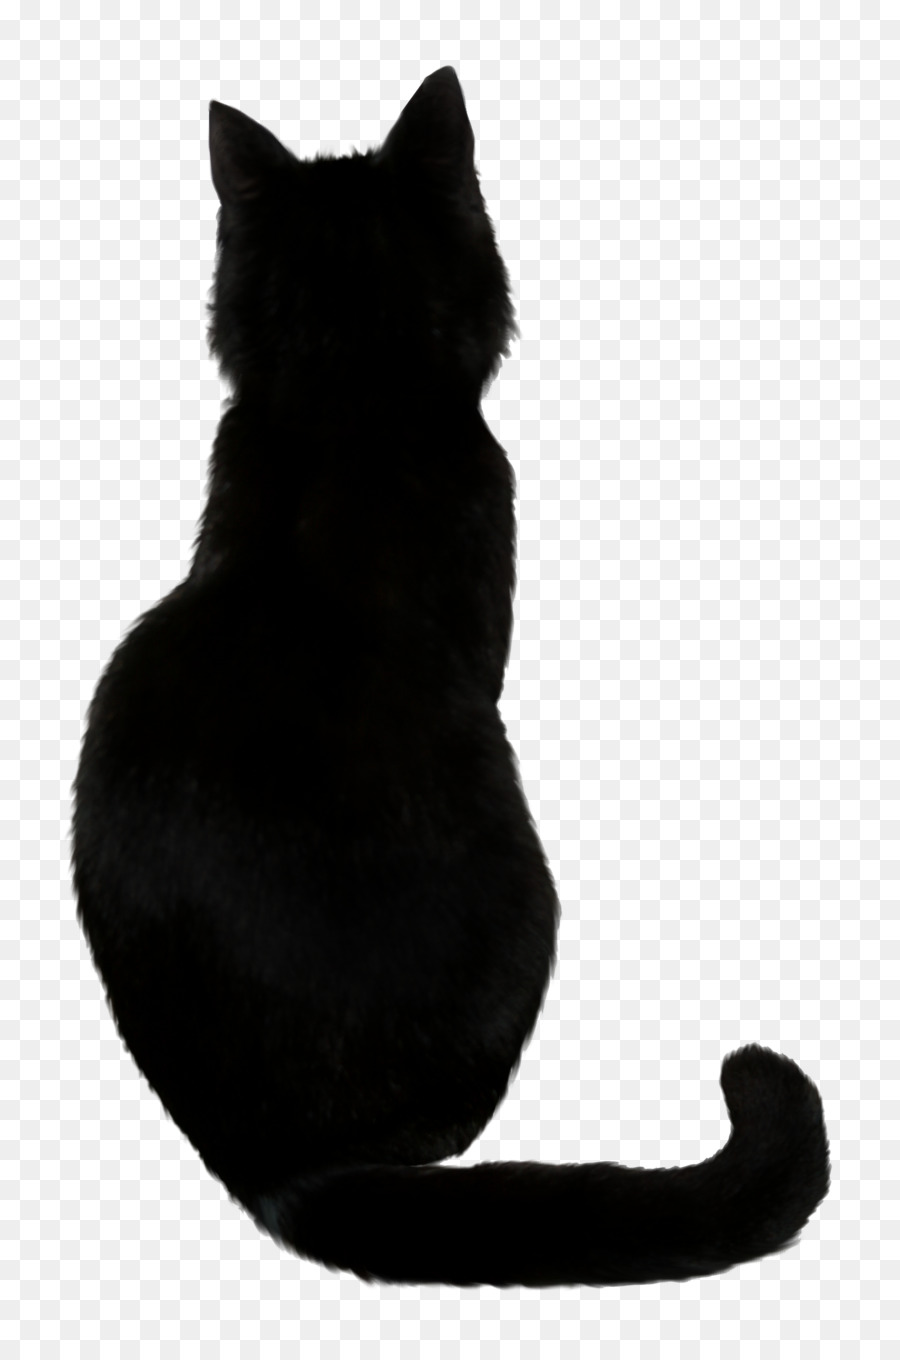 Black cat Kitten Drawing - Cat png download - 900*1350 - Free Transparent Cat png Download.